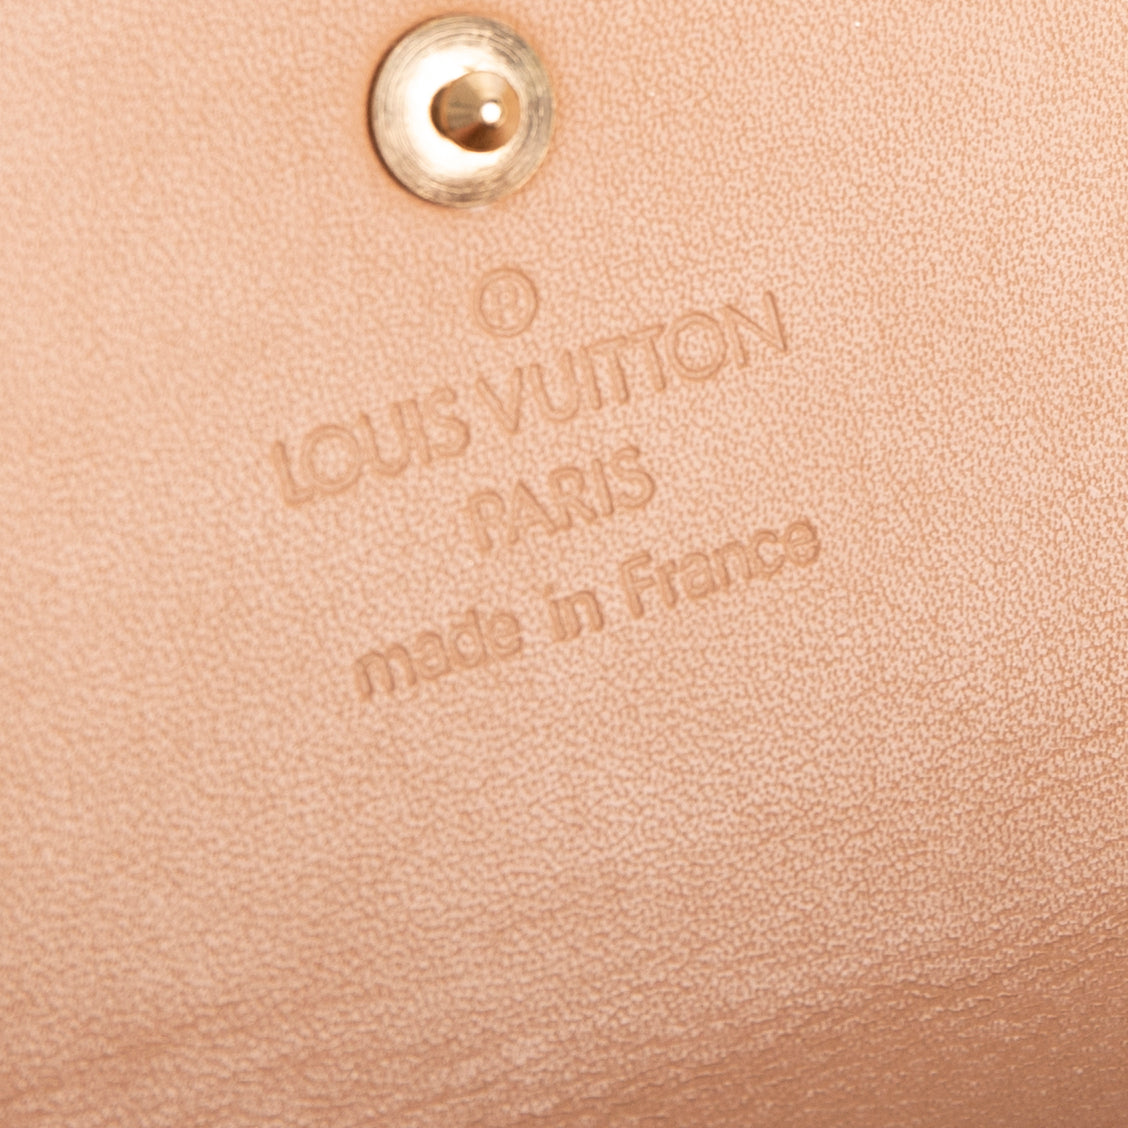 Louis Vuitton Elise Wallet in brown Monogram . Made in France